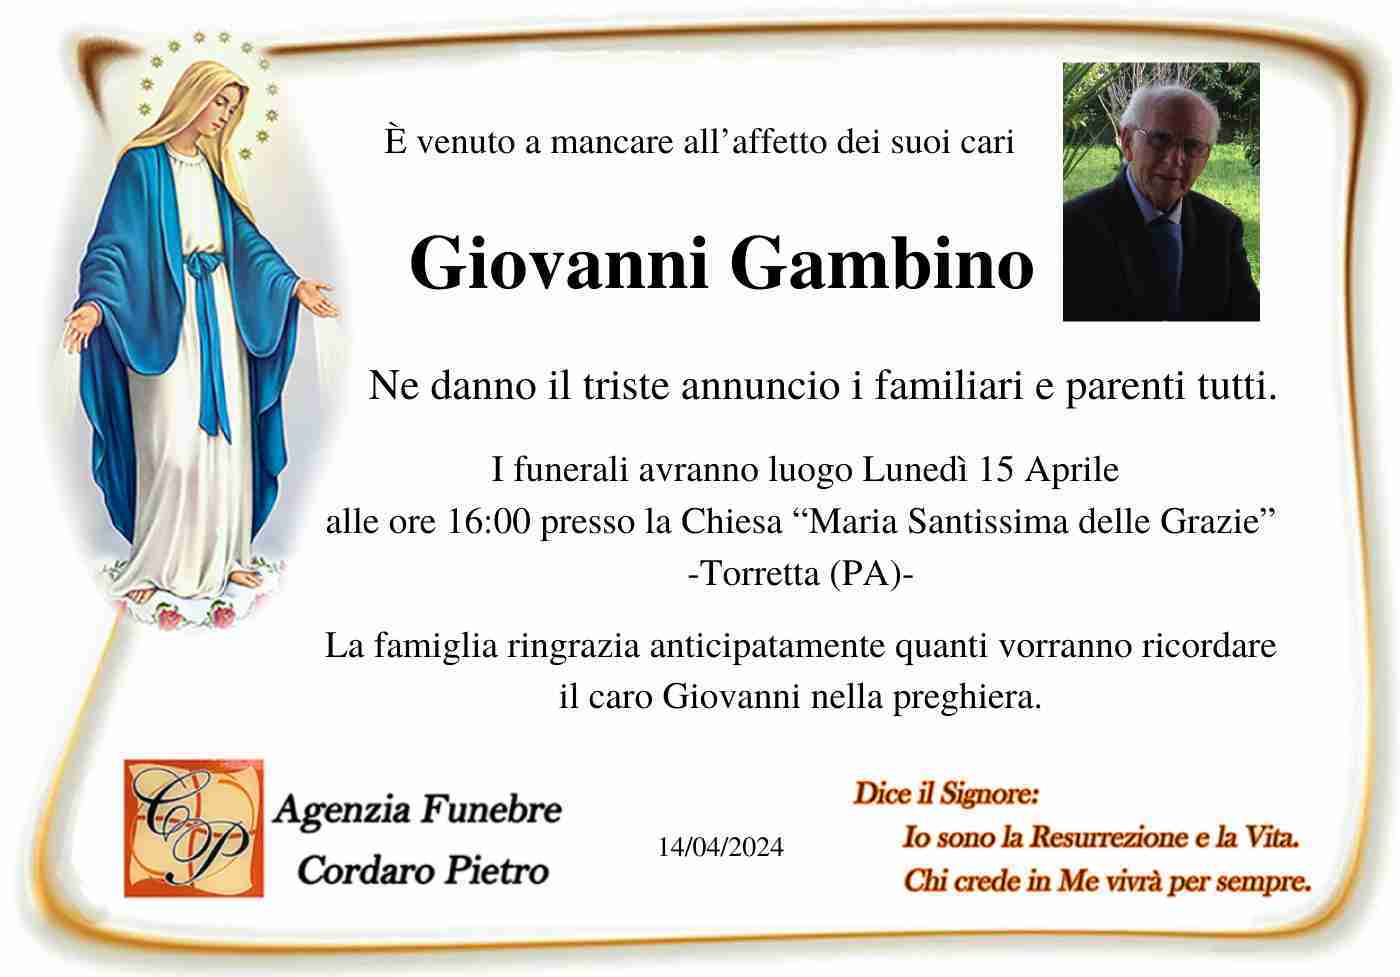 Giovanni Gambino